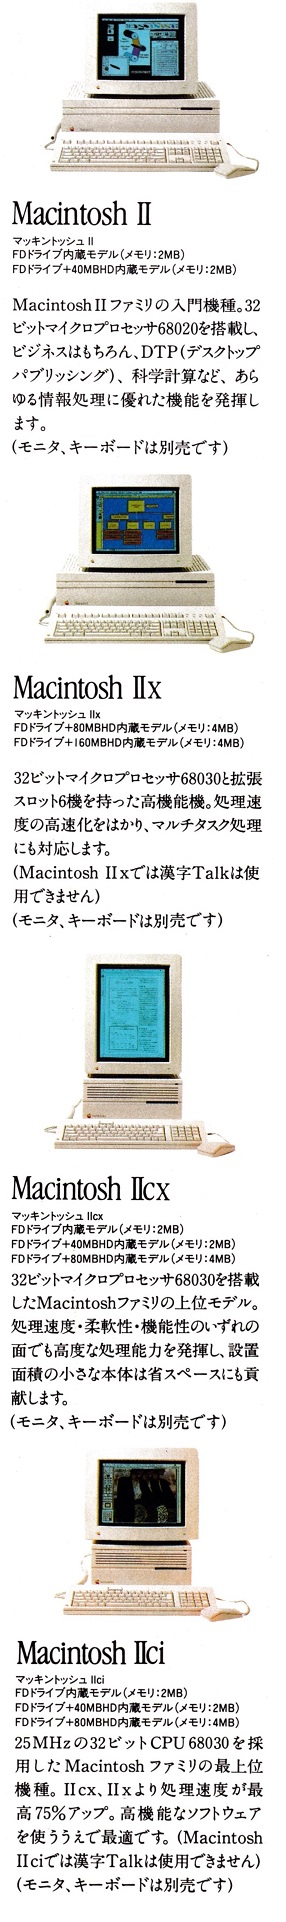 ASCII1990(04)a17AppleTrim2_W286.jpg